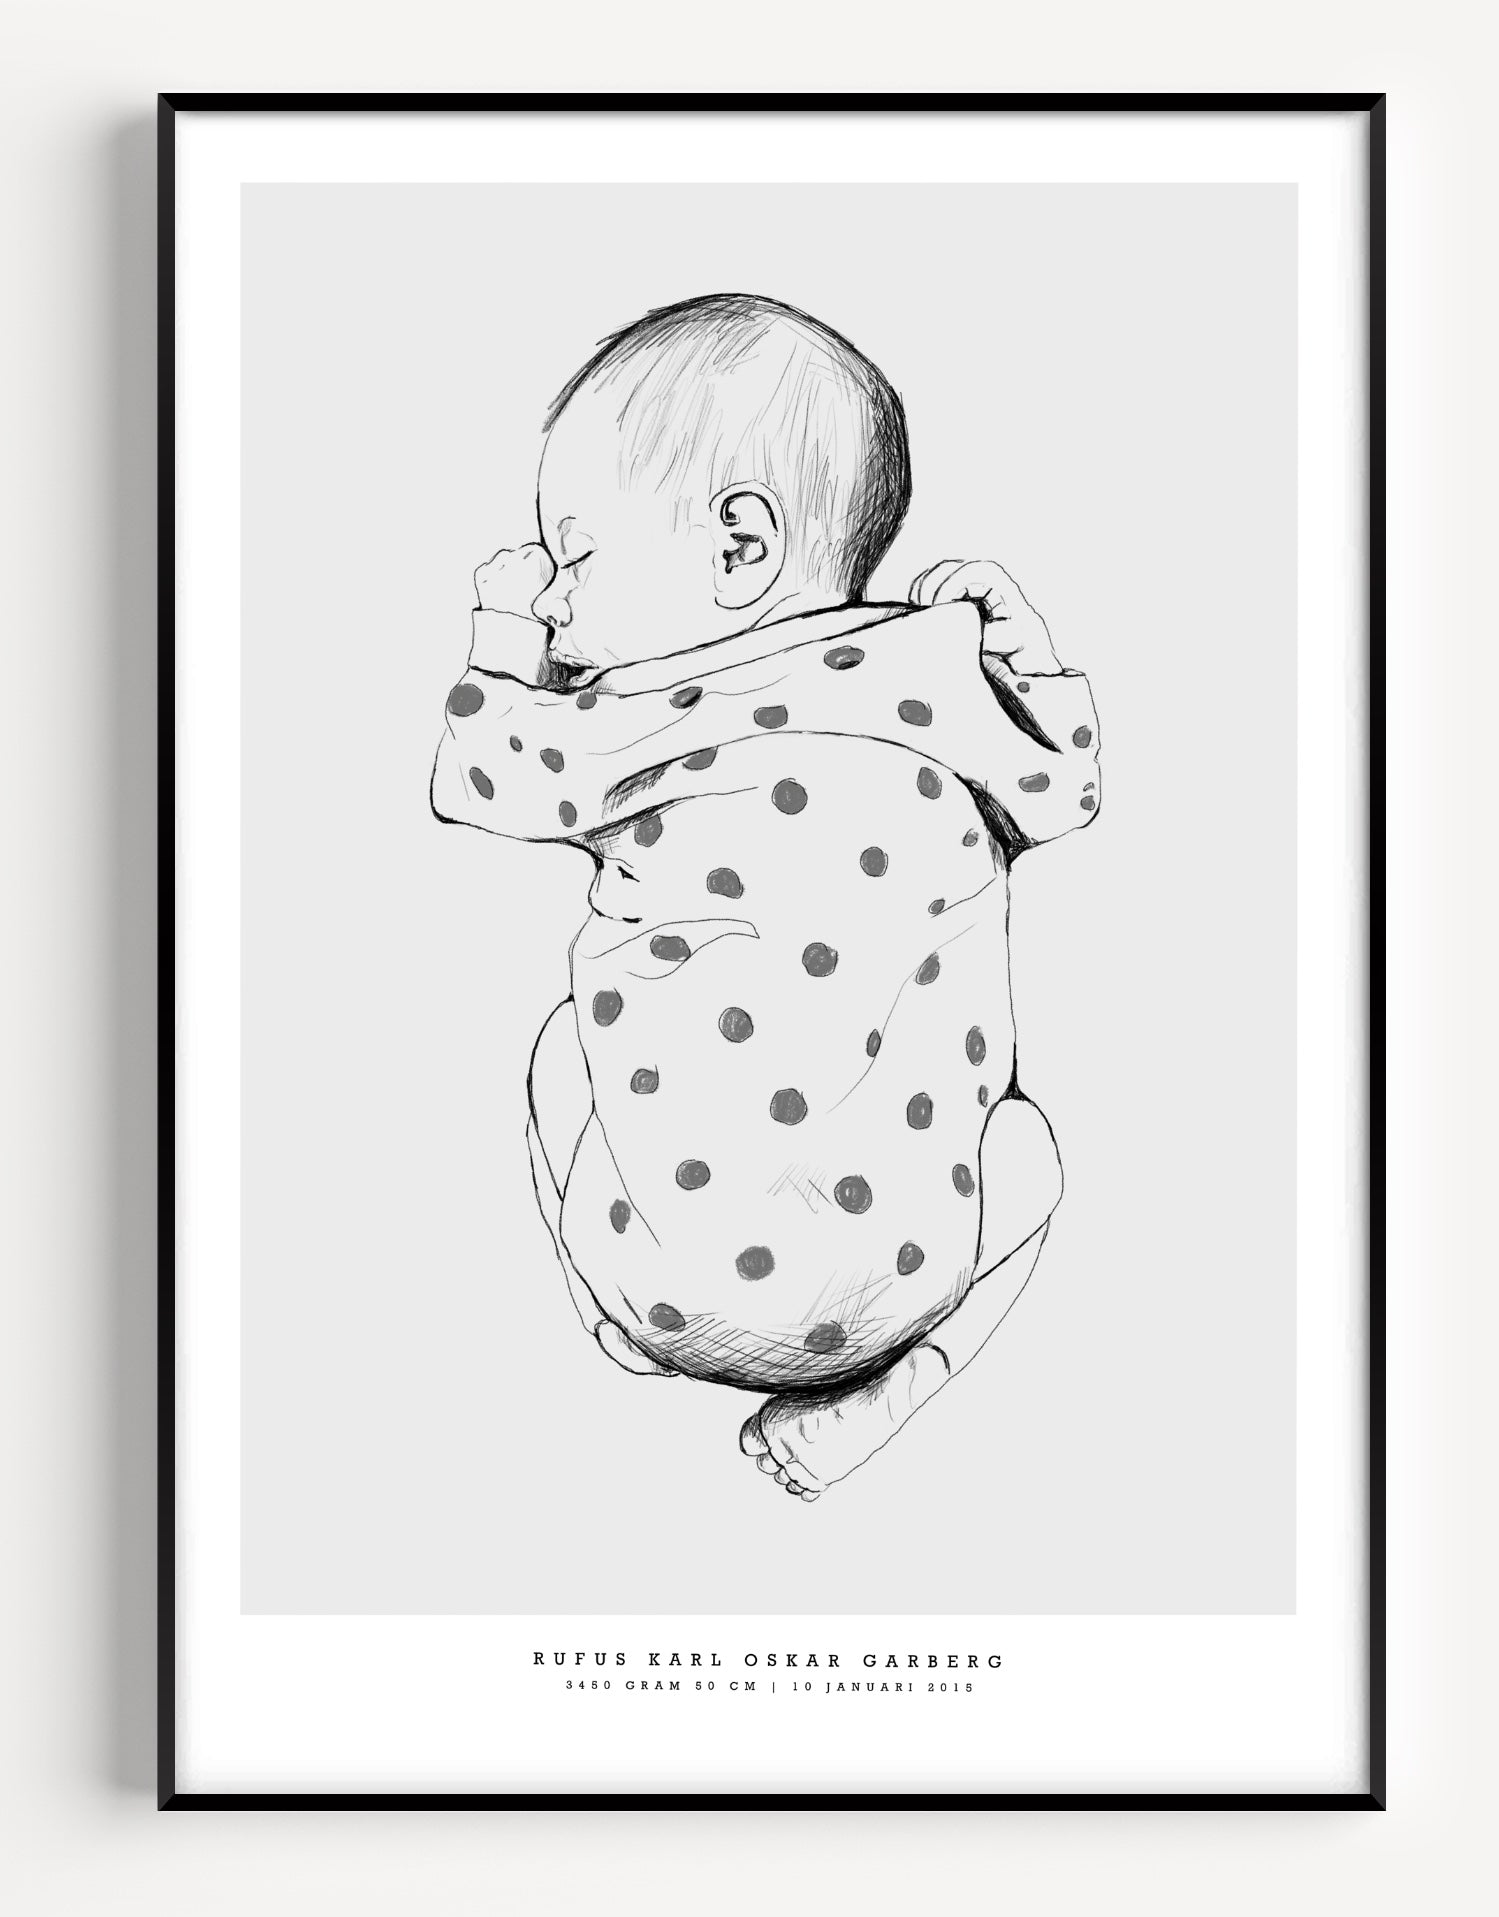 Drawn birth poster